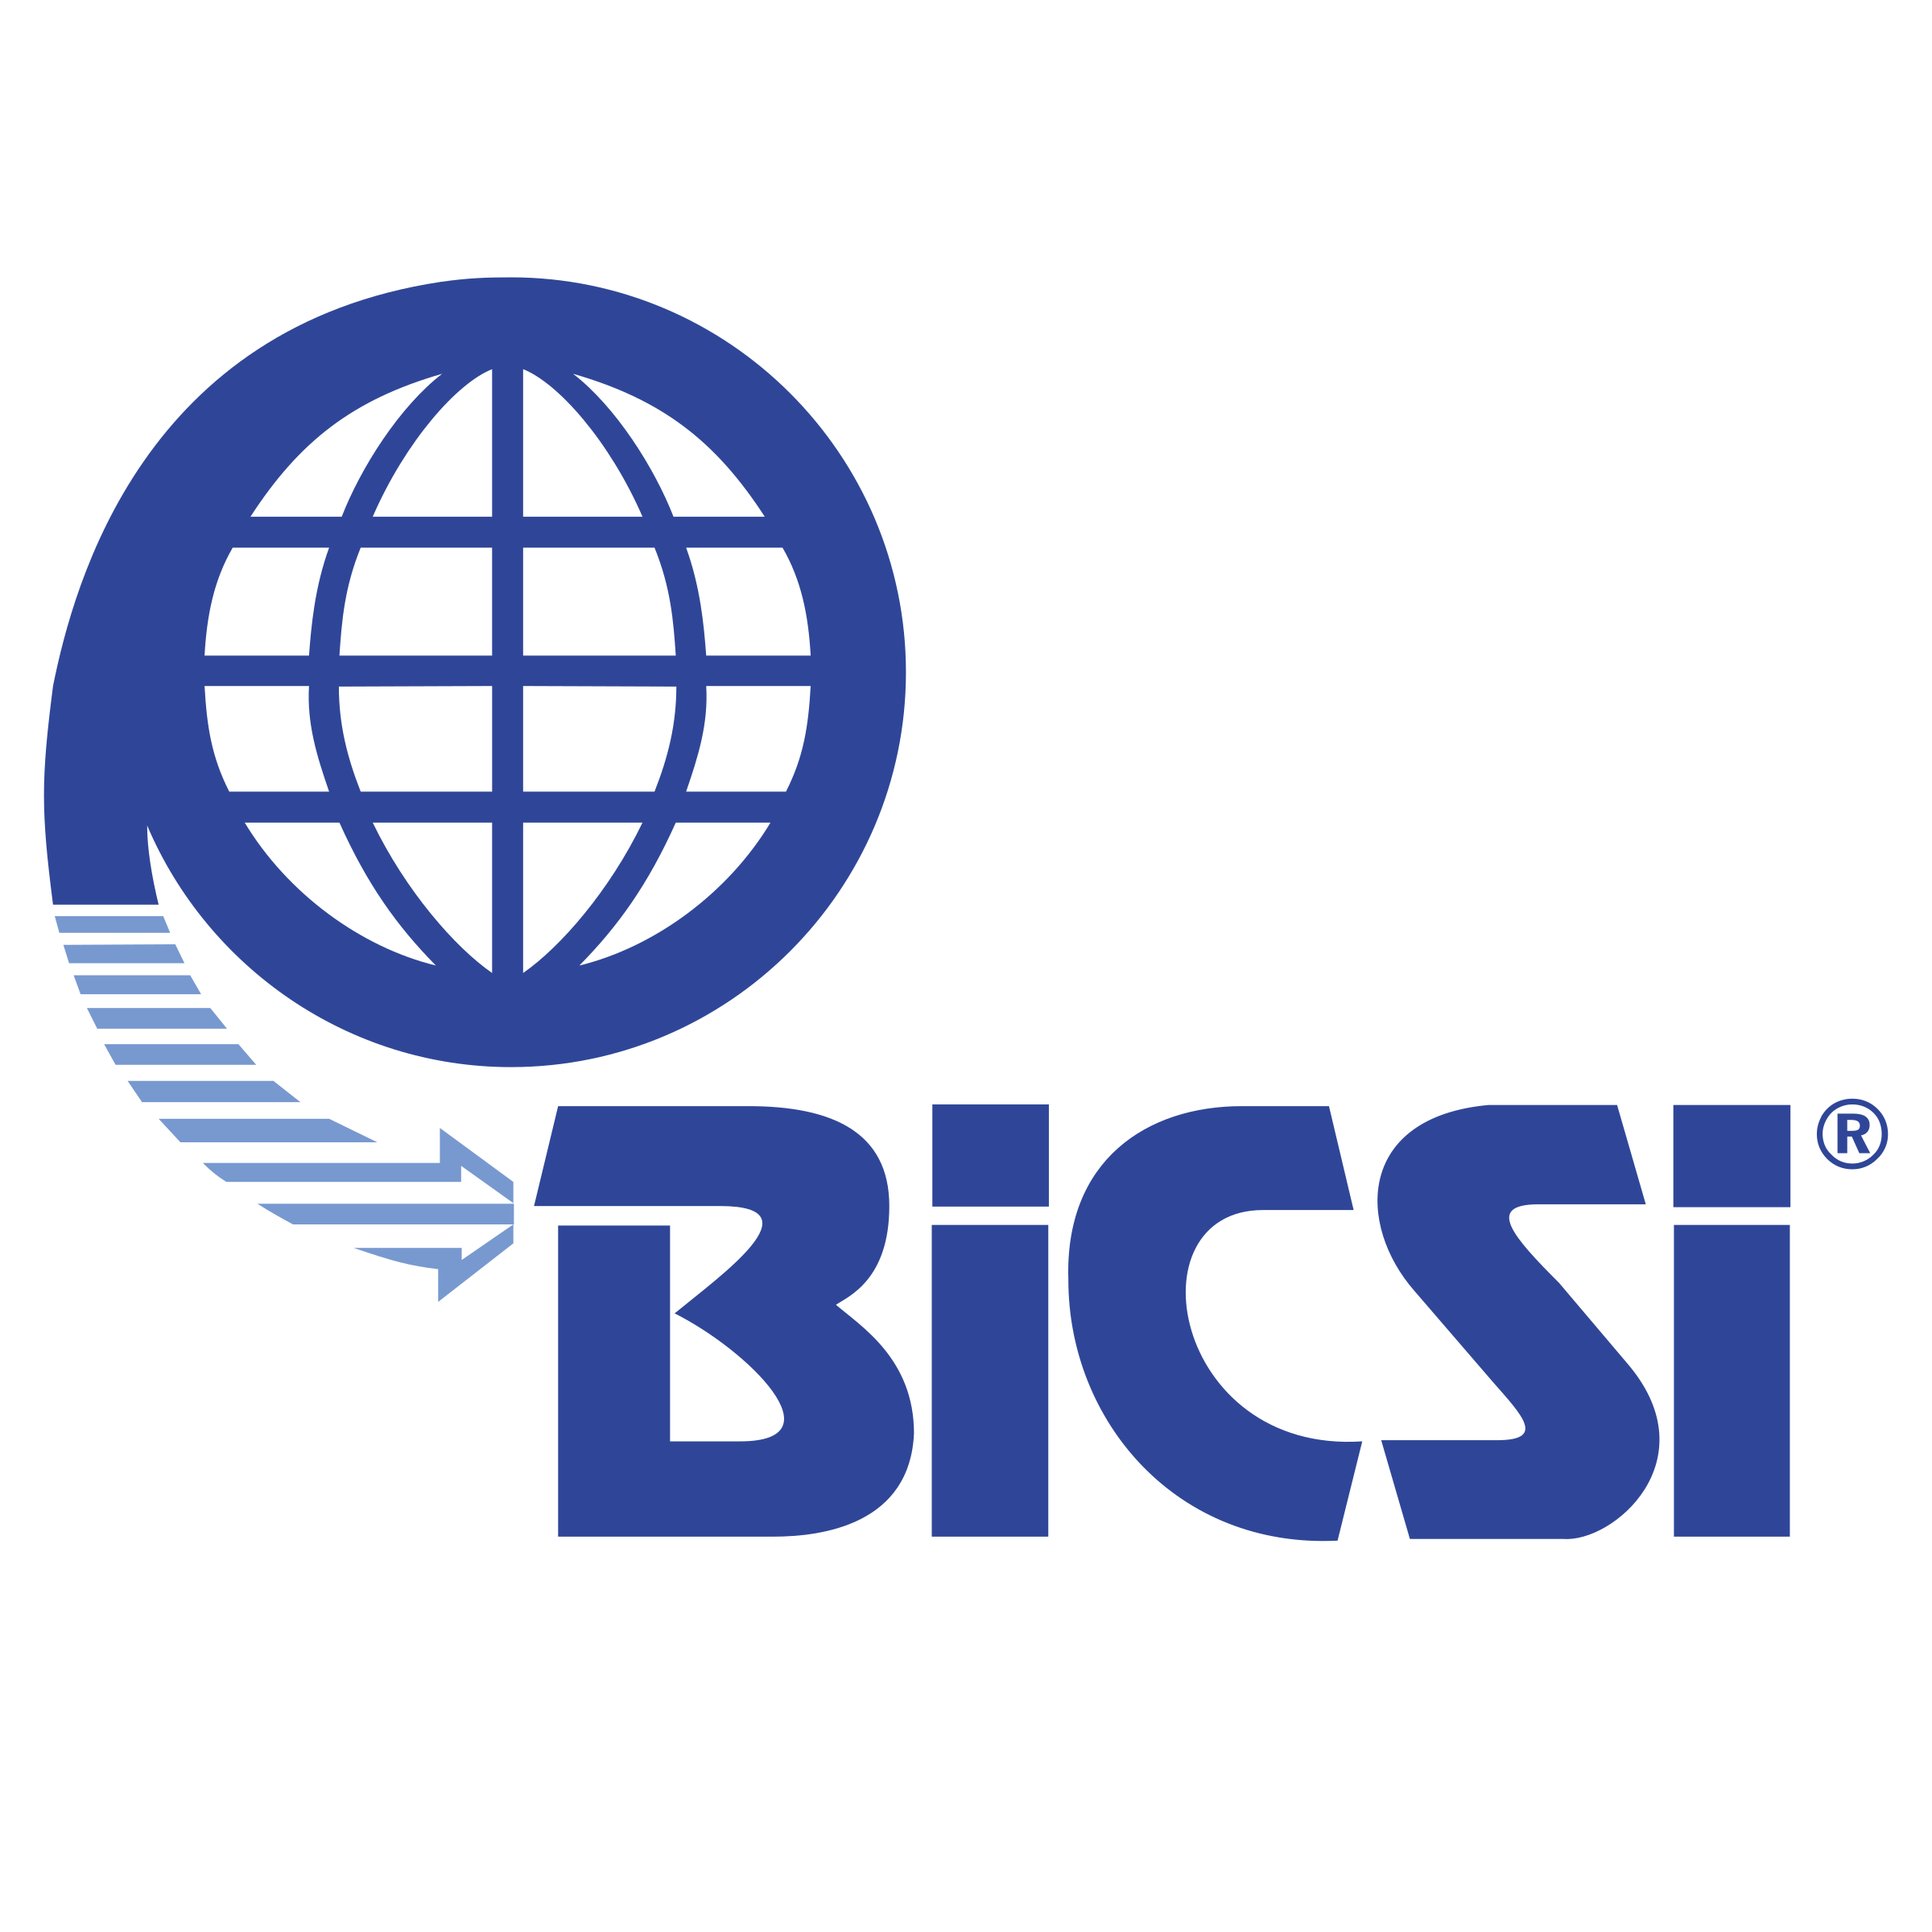 BICSI Logo - BiCSi Logo PNG Transparent & SVG Vector - Freebie Supply